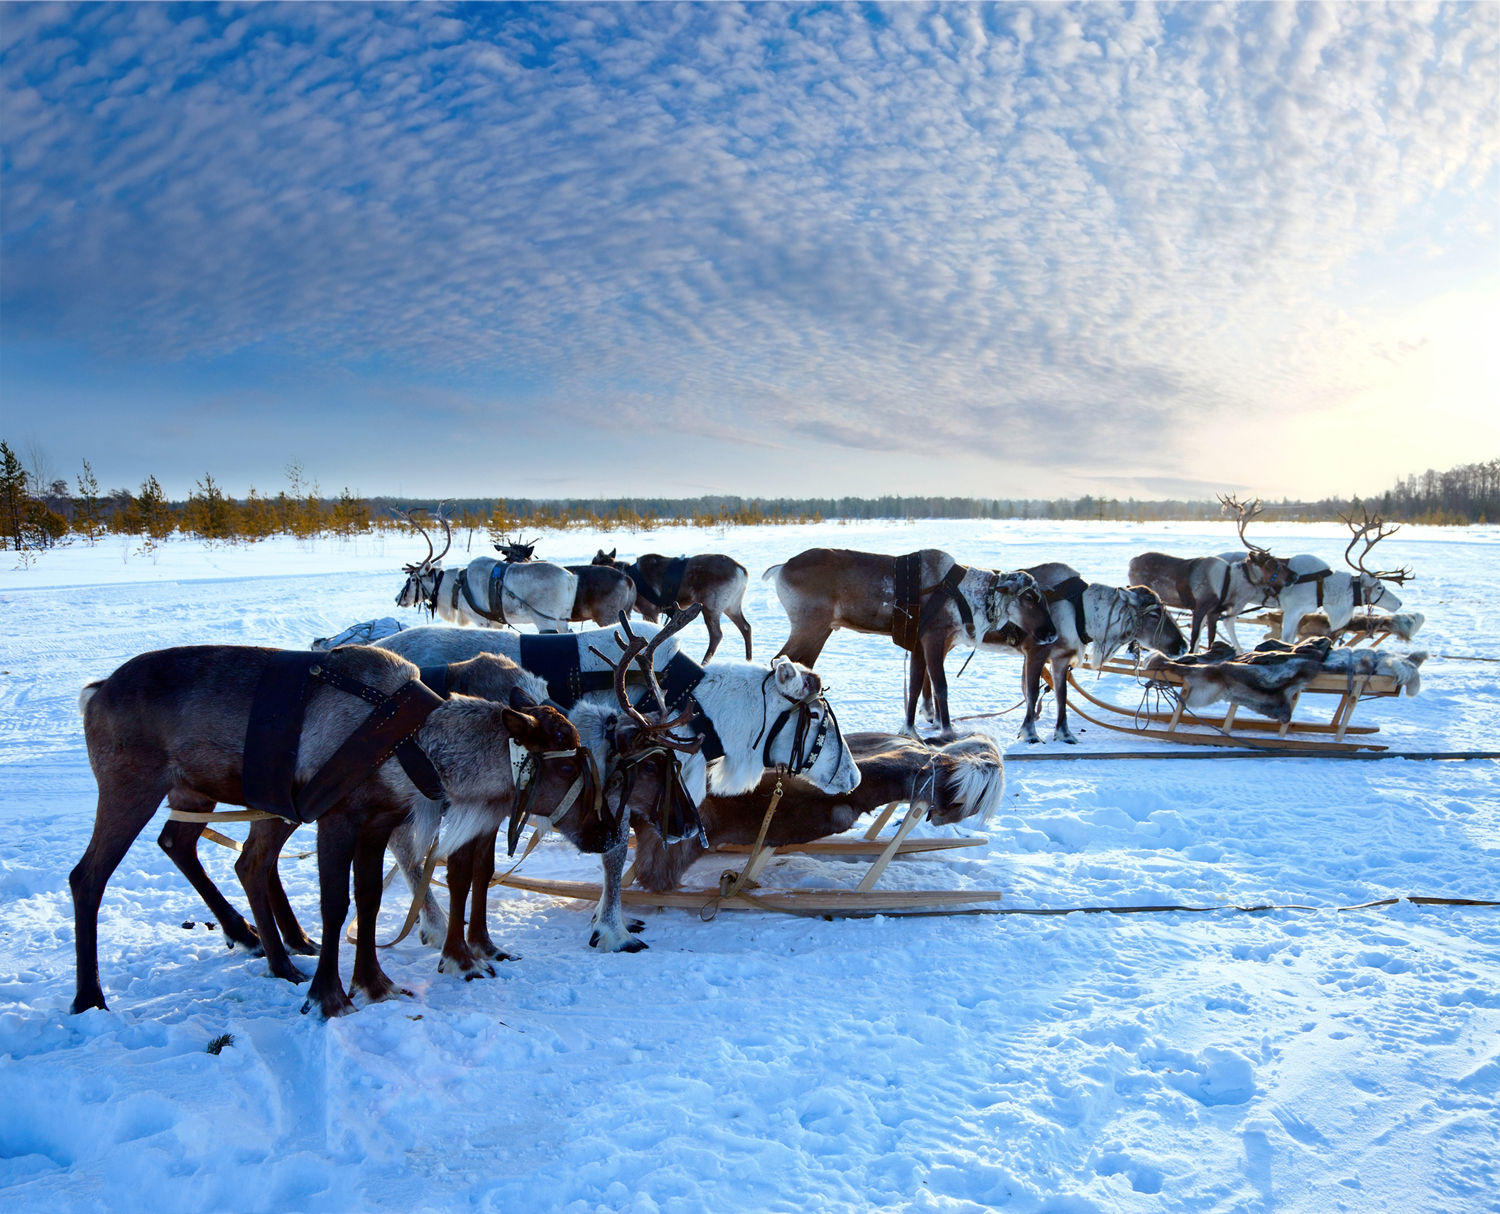 Reindeer in Finland's Lapland region.